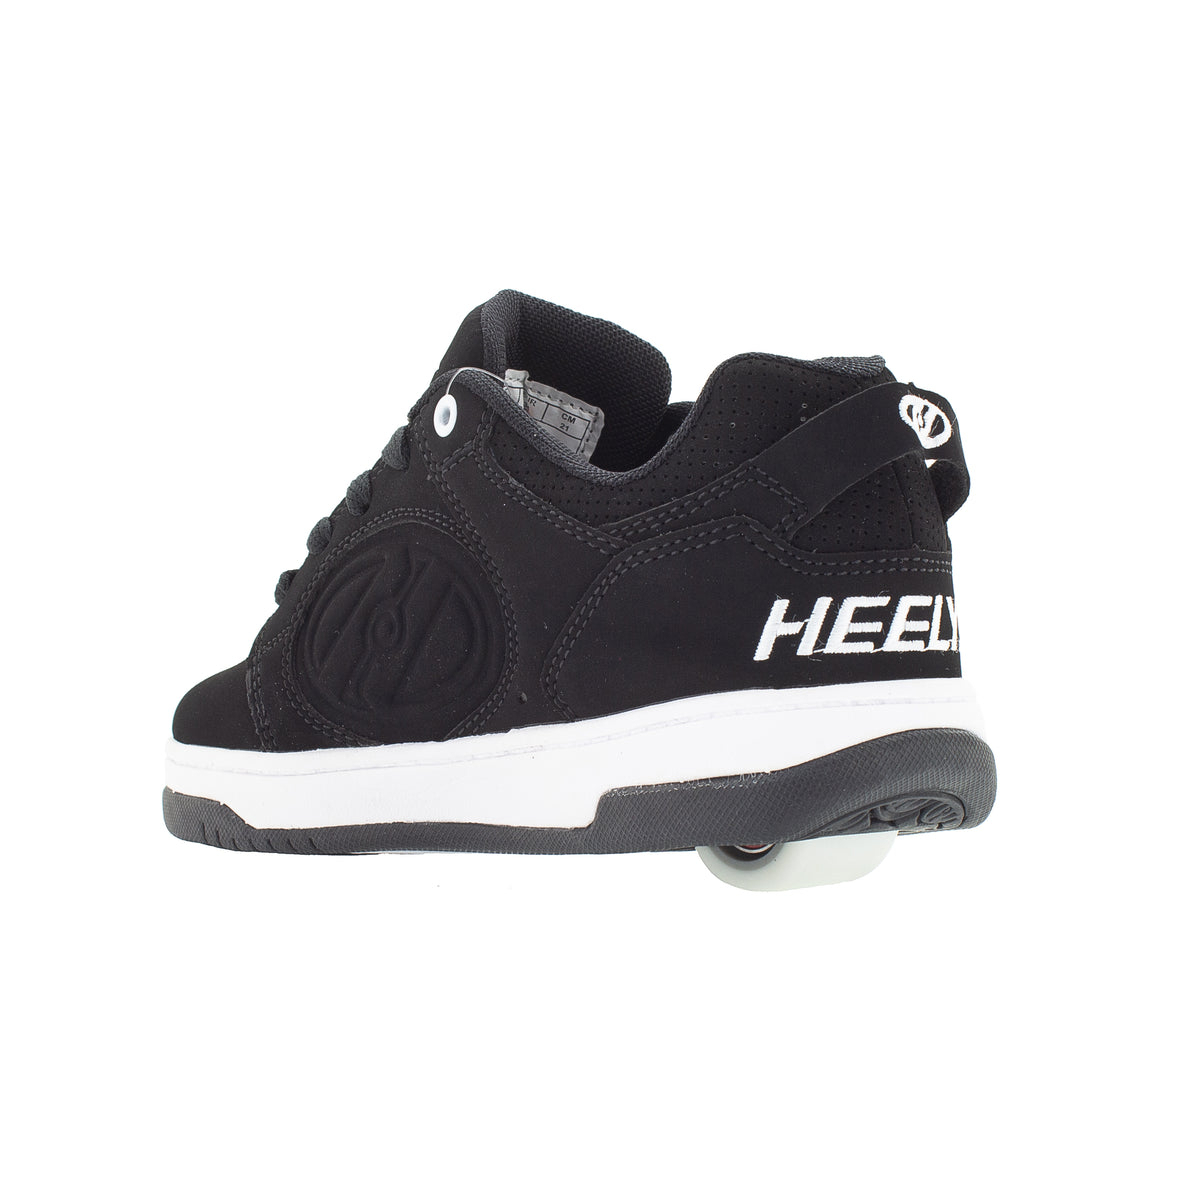 HEELYS Men's Voyager Wheeled Shoe Black/White - HE100713M BLACK/WHITE - BLACK/WHITE, 12